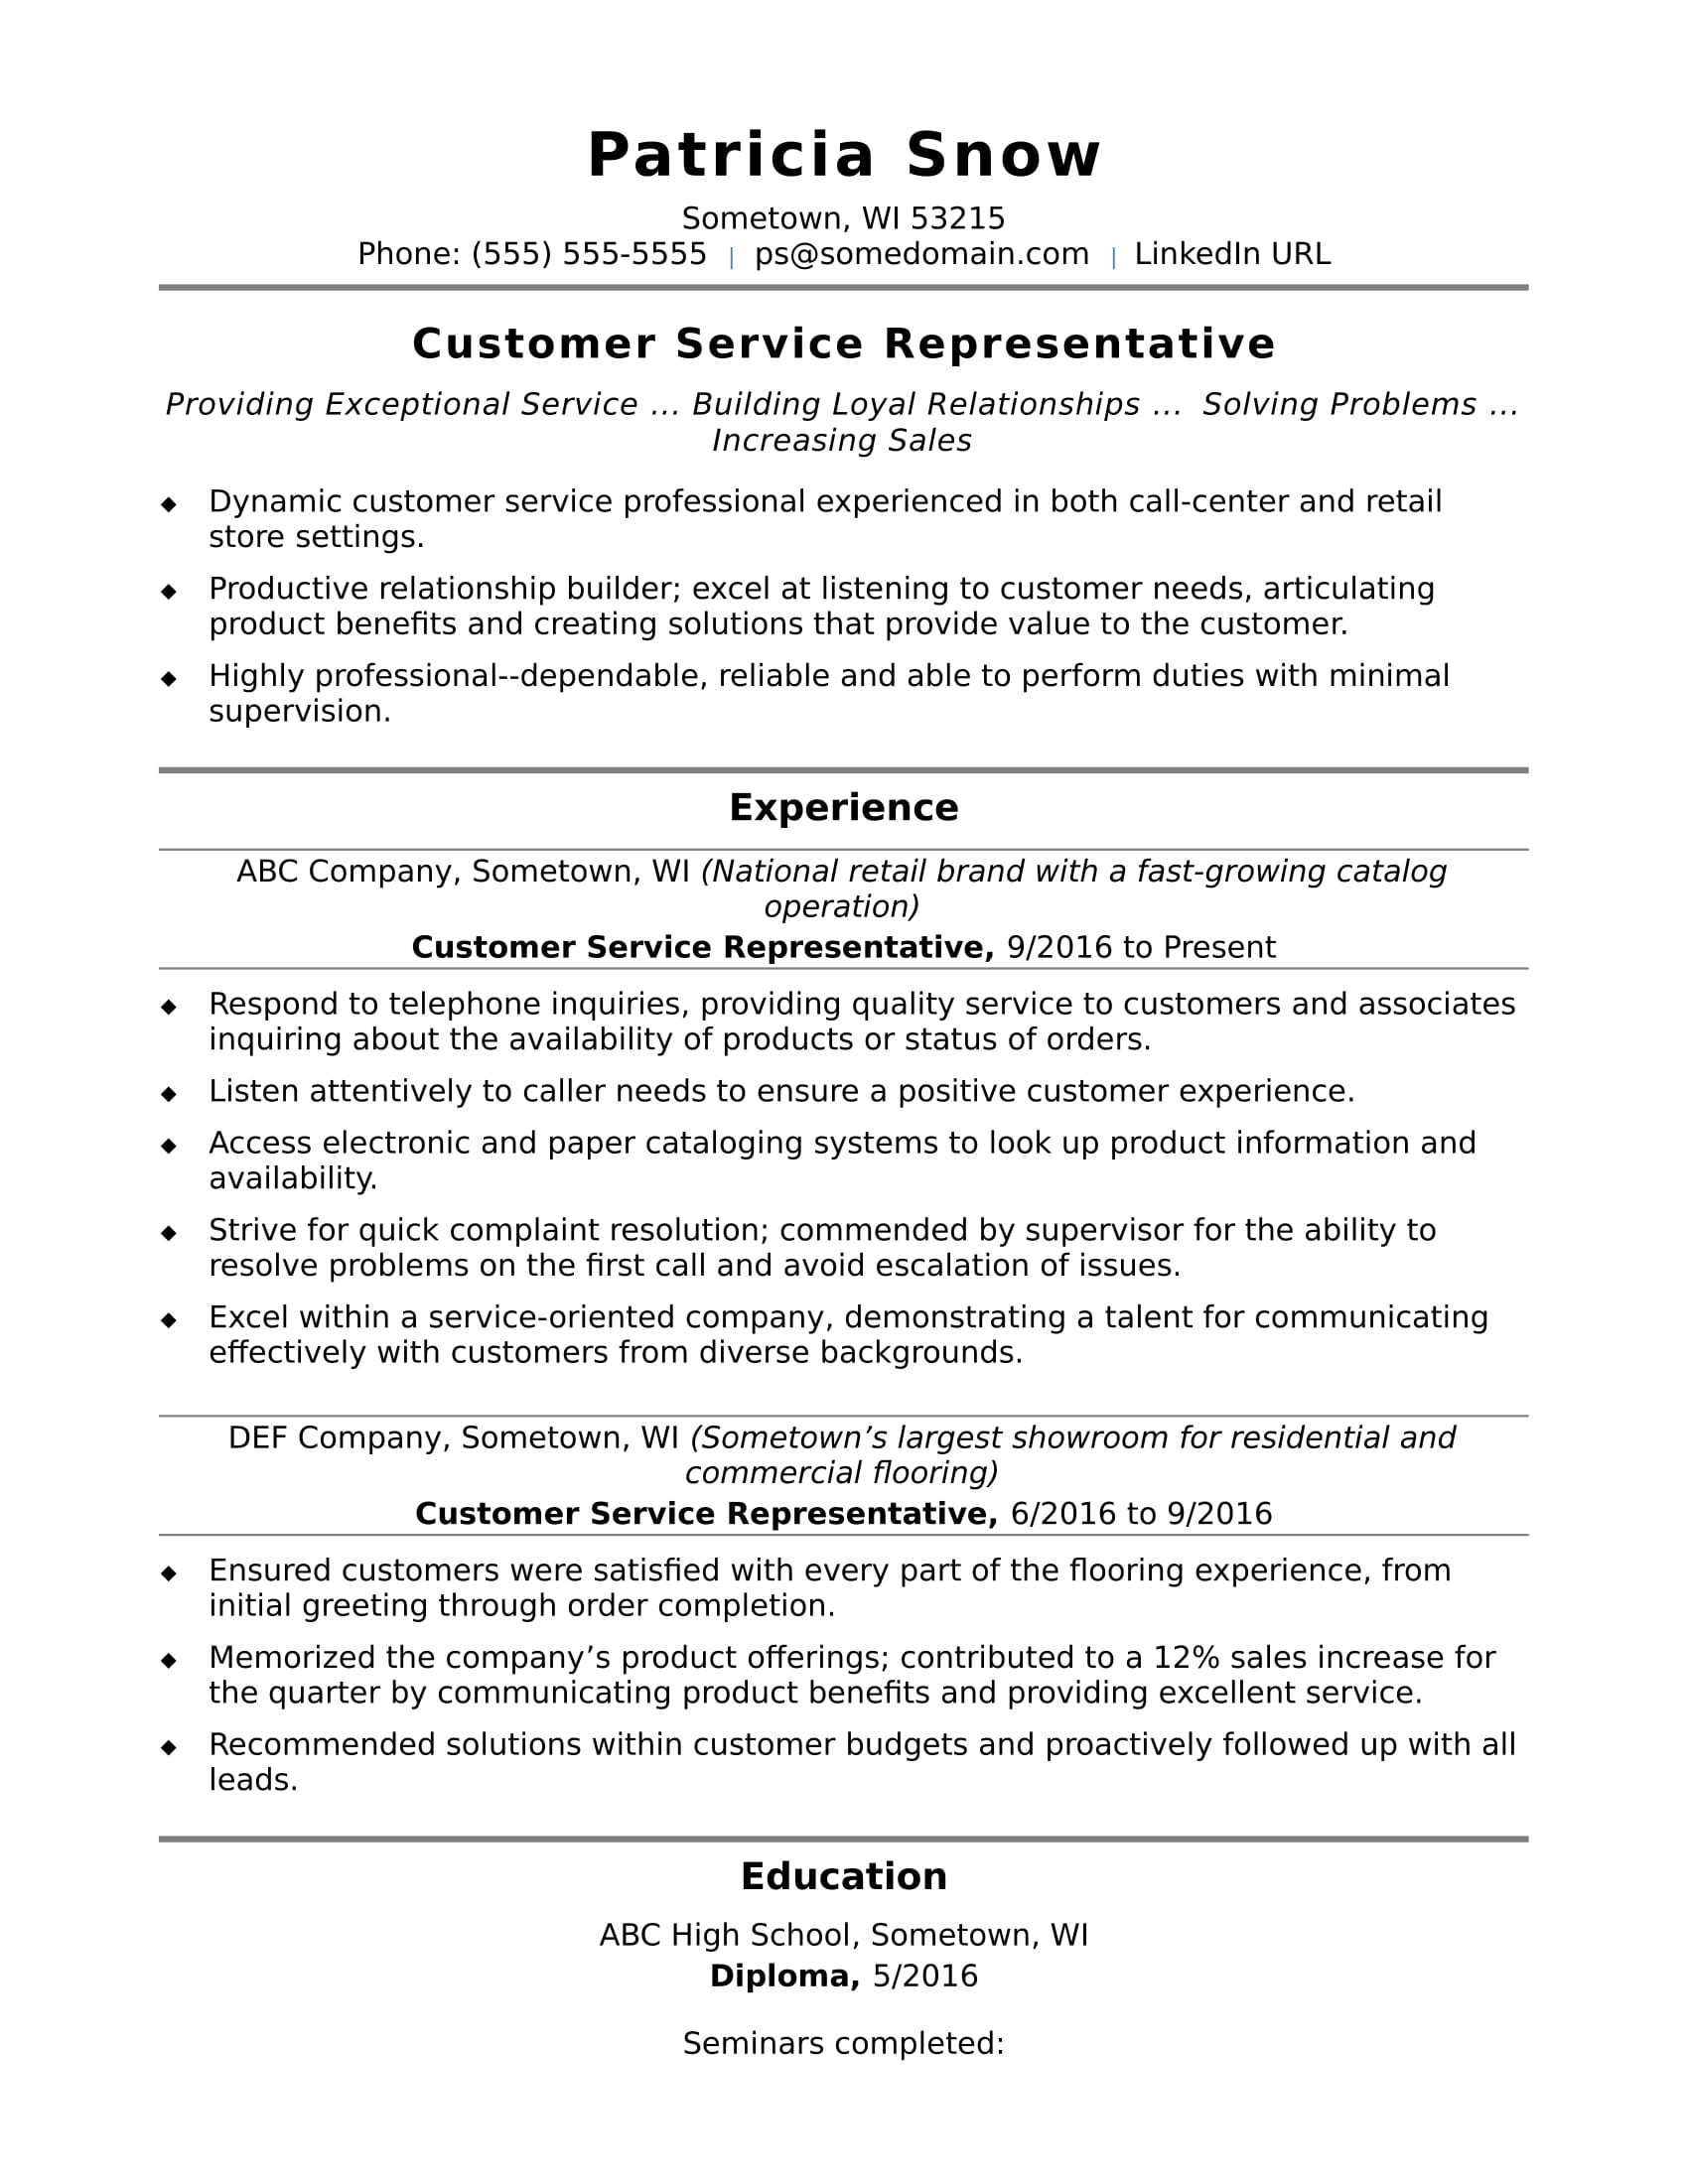 Sample Resume for Entry Level Retail Position Entry-level Customer Service Resume Sample Monster.com